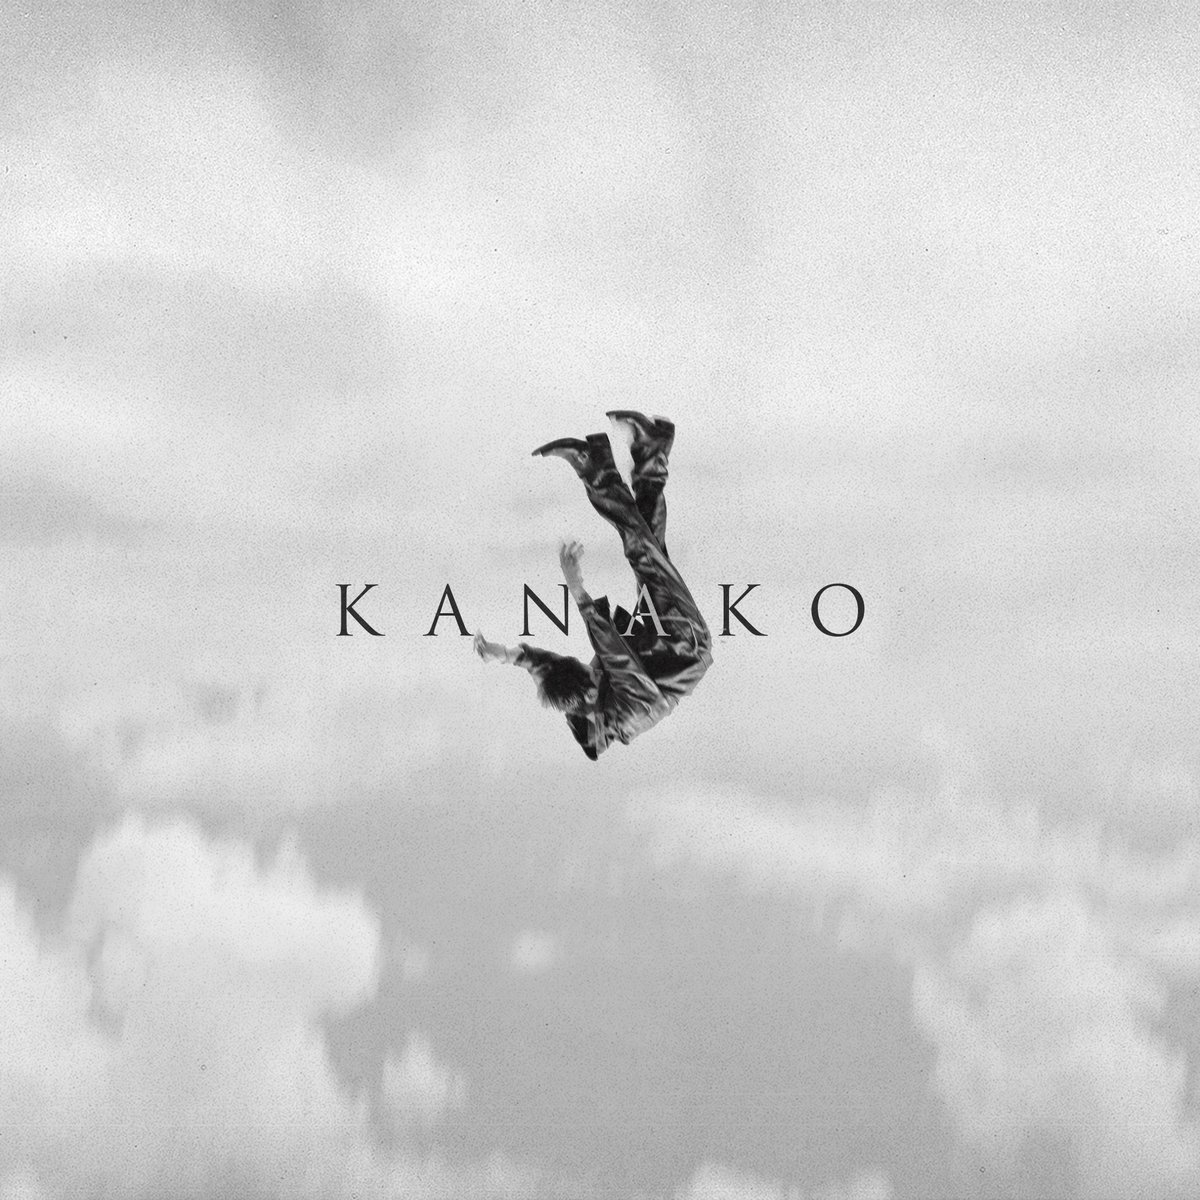 'Kanako' IS OUT NOW

stream 'Kanako' here
felip.lnk.to/kanako